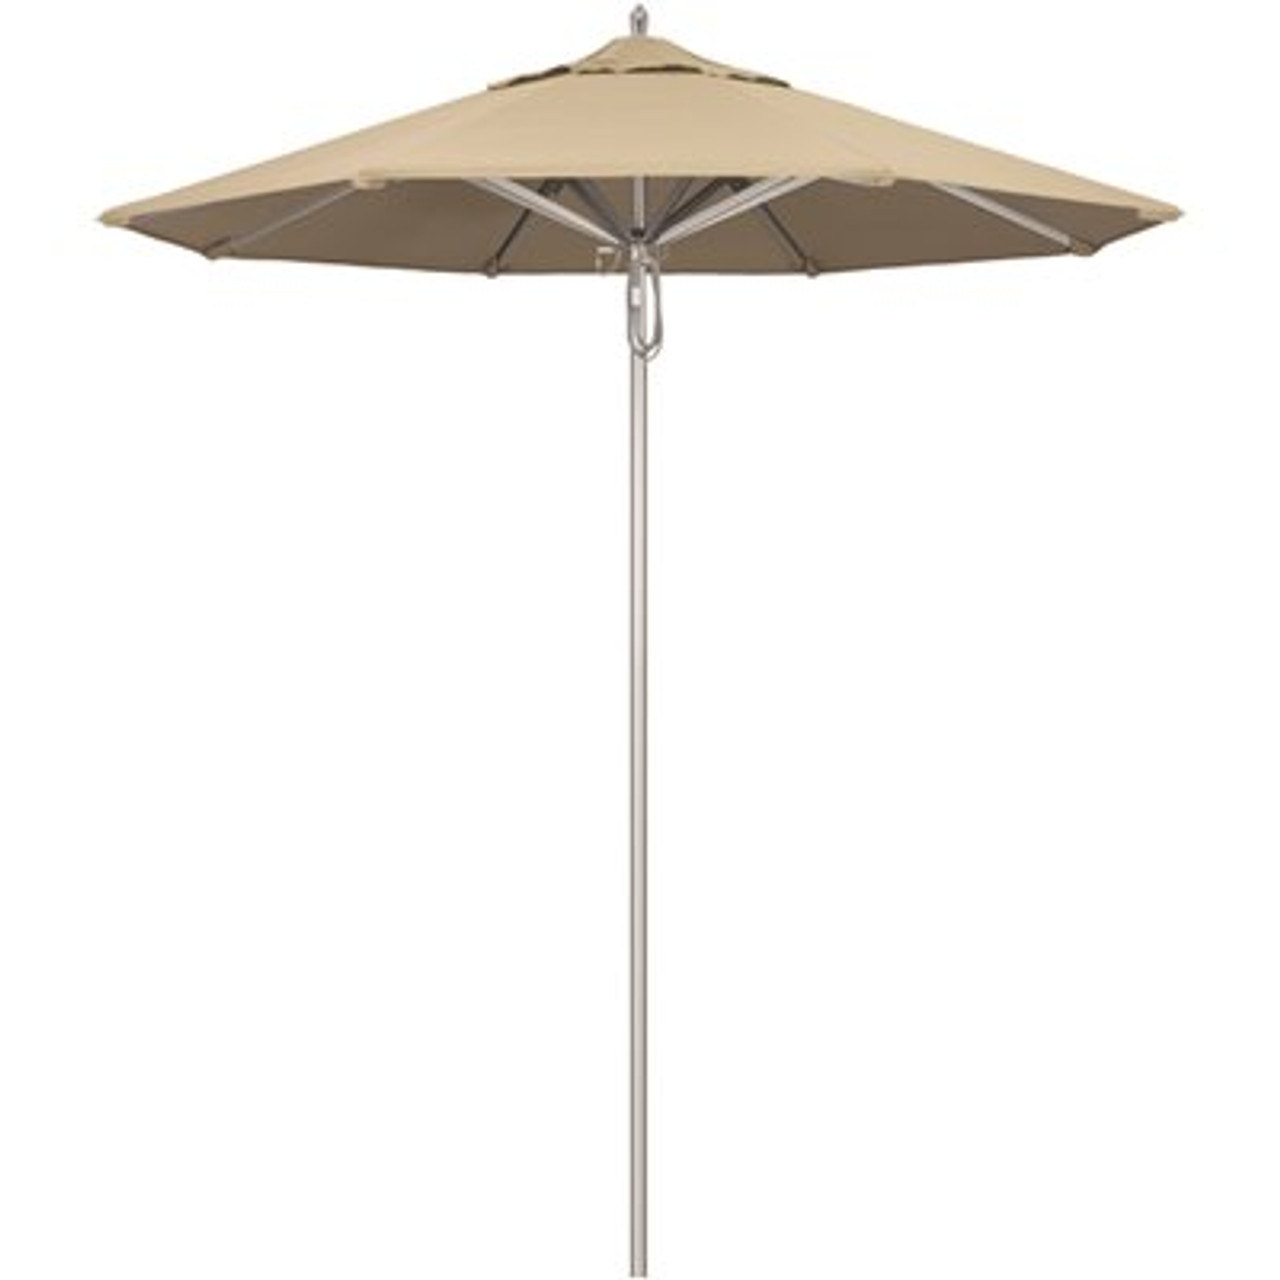 California Umbrella 7.5 ft. Silver Aluminum Commercial Market Patio Umbrella with Pulley Lift in Antique Beige Sunbrella